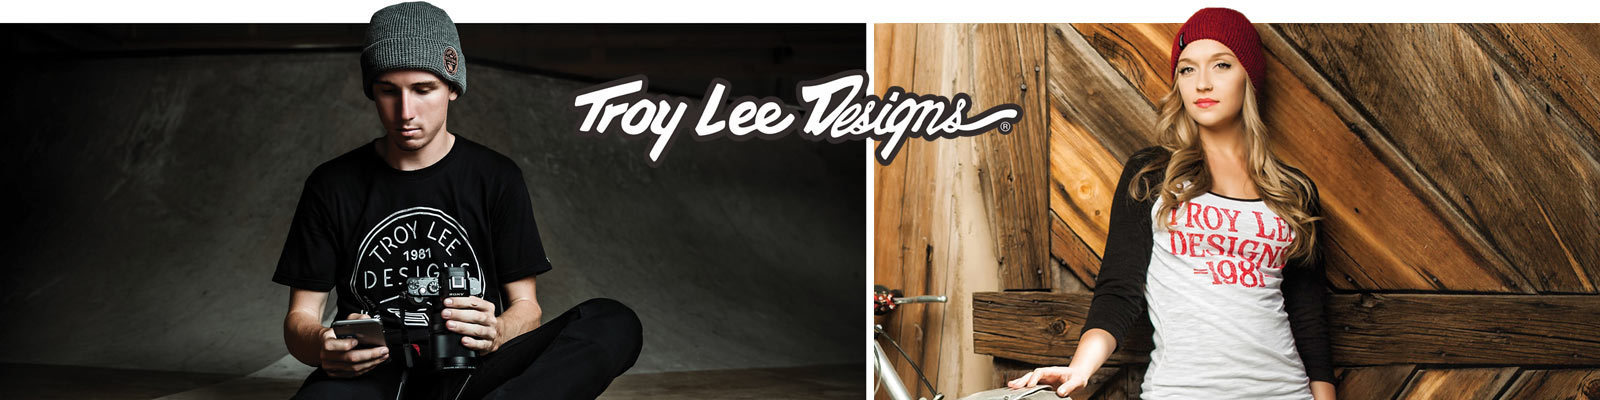 Troy Lee Designs Shorts